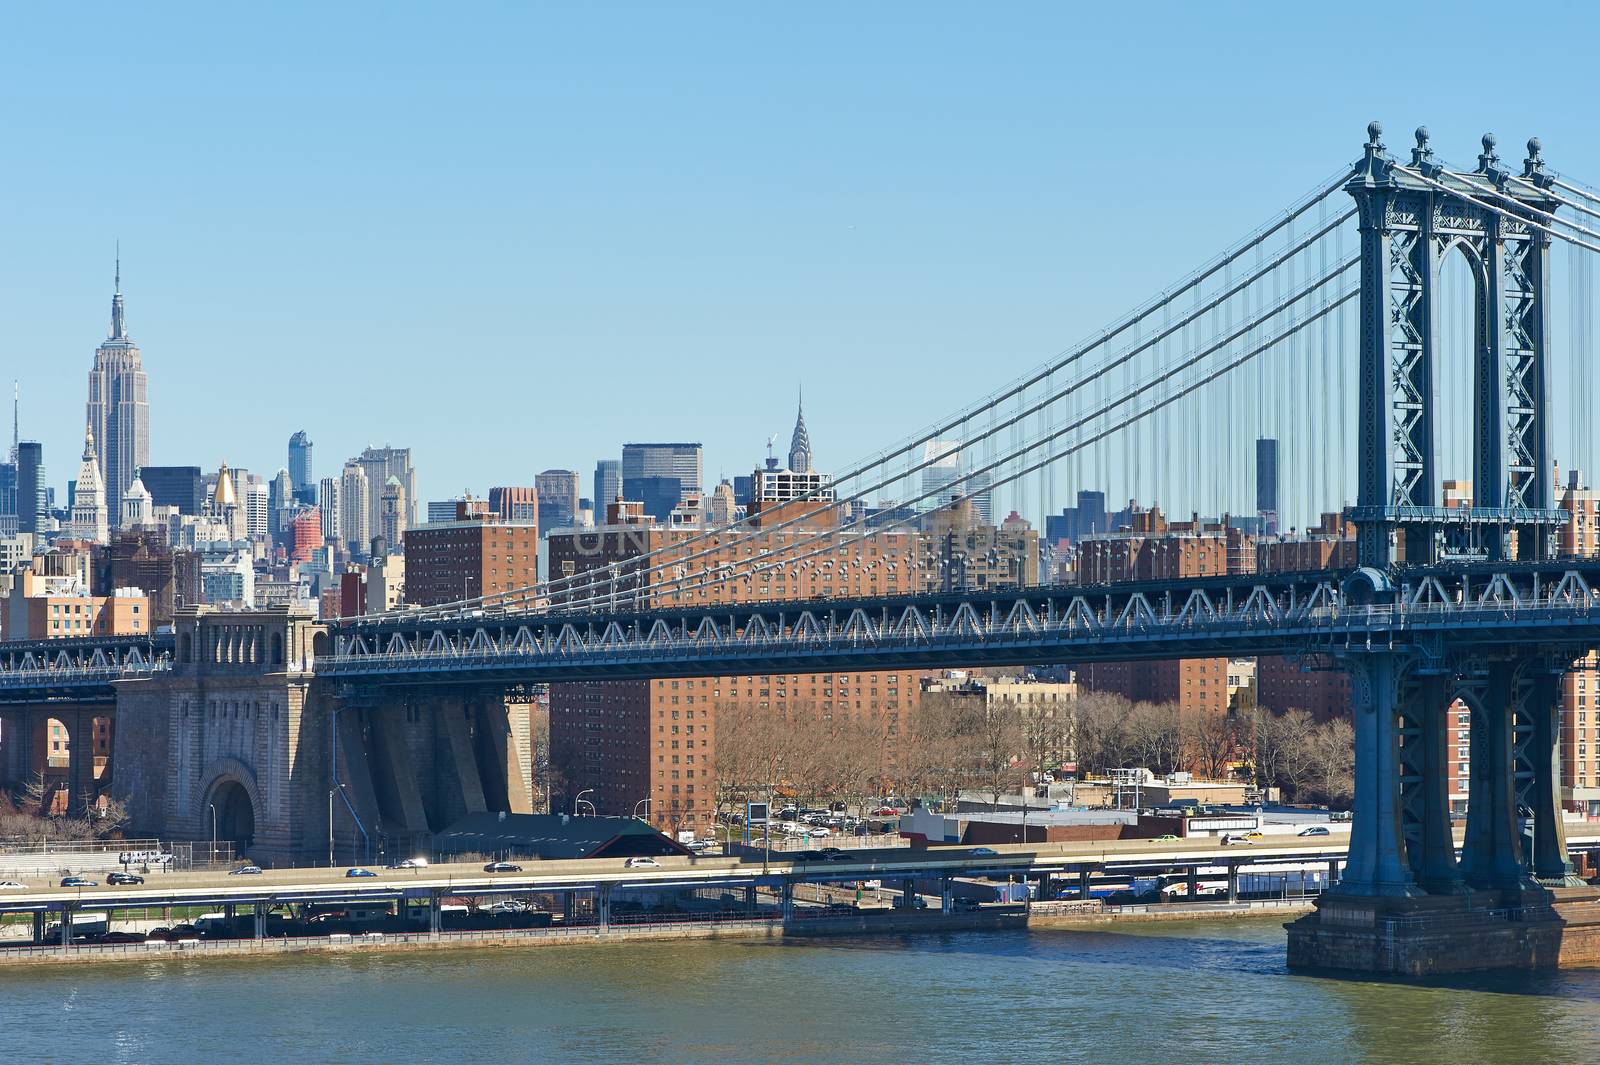 Manhattan Bridge and skyline view from Brooklyn Bridge by haveseen